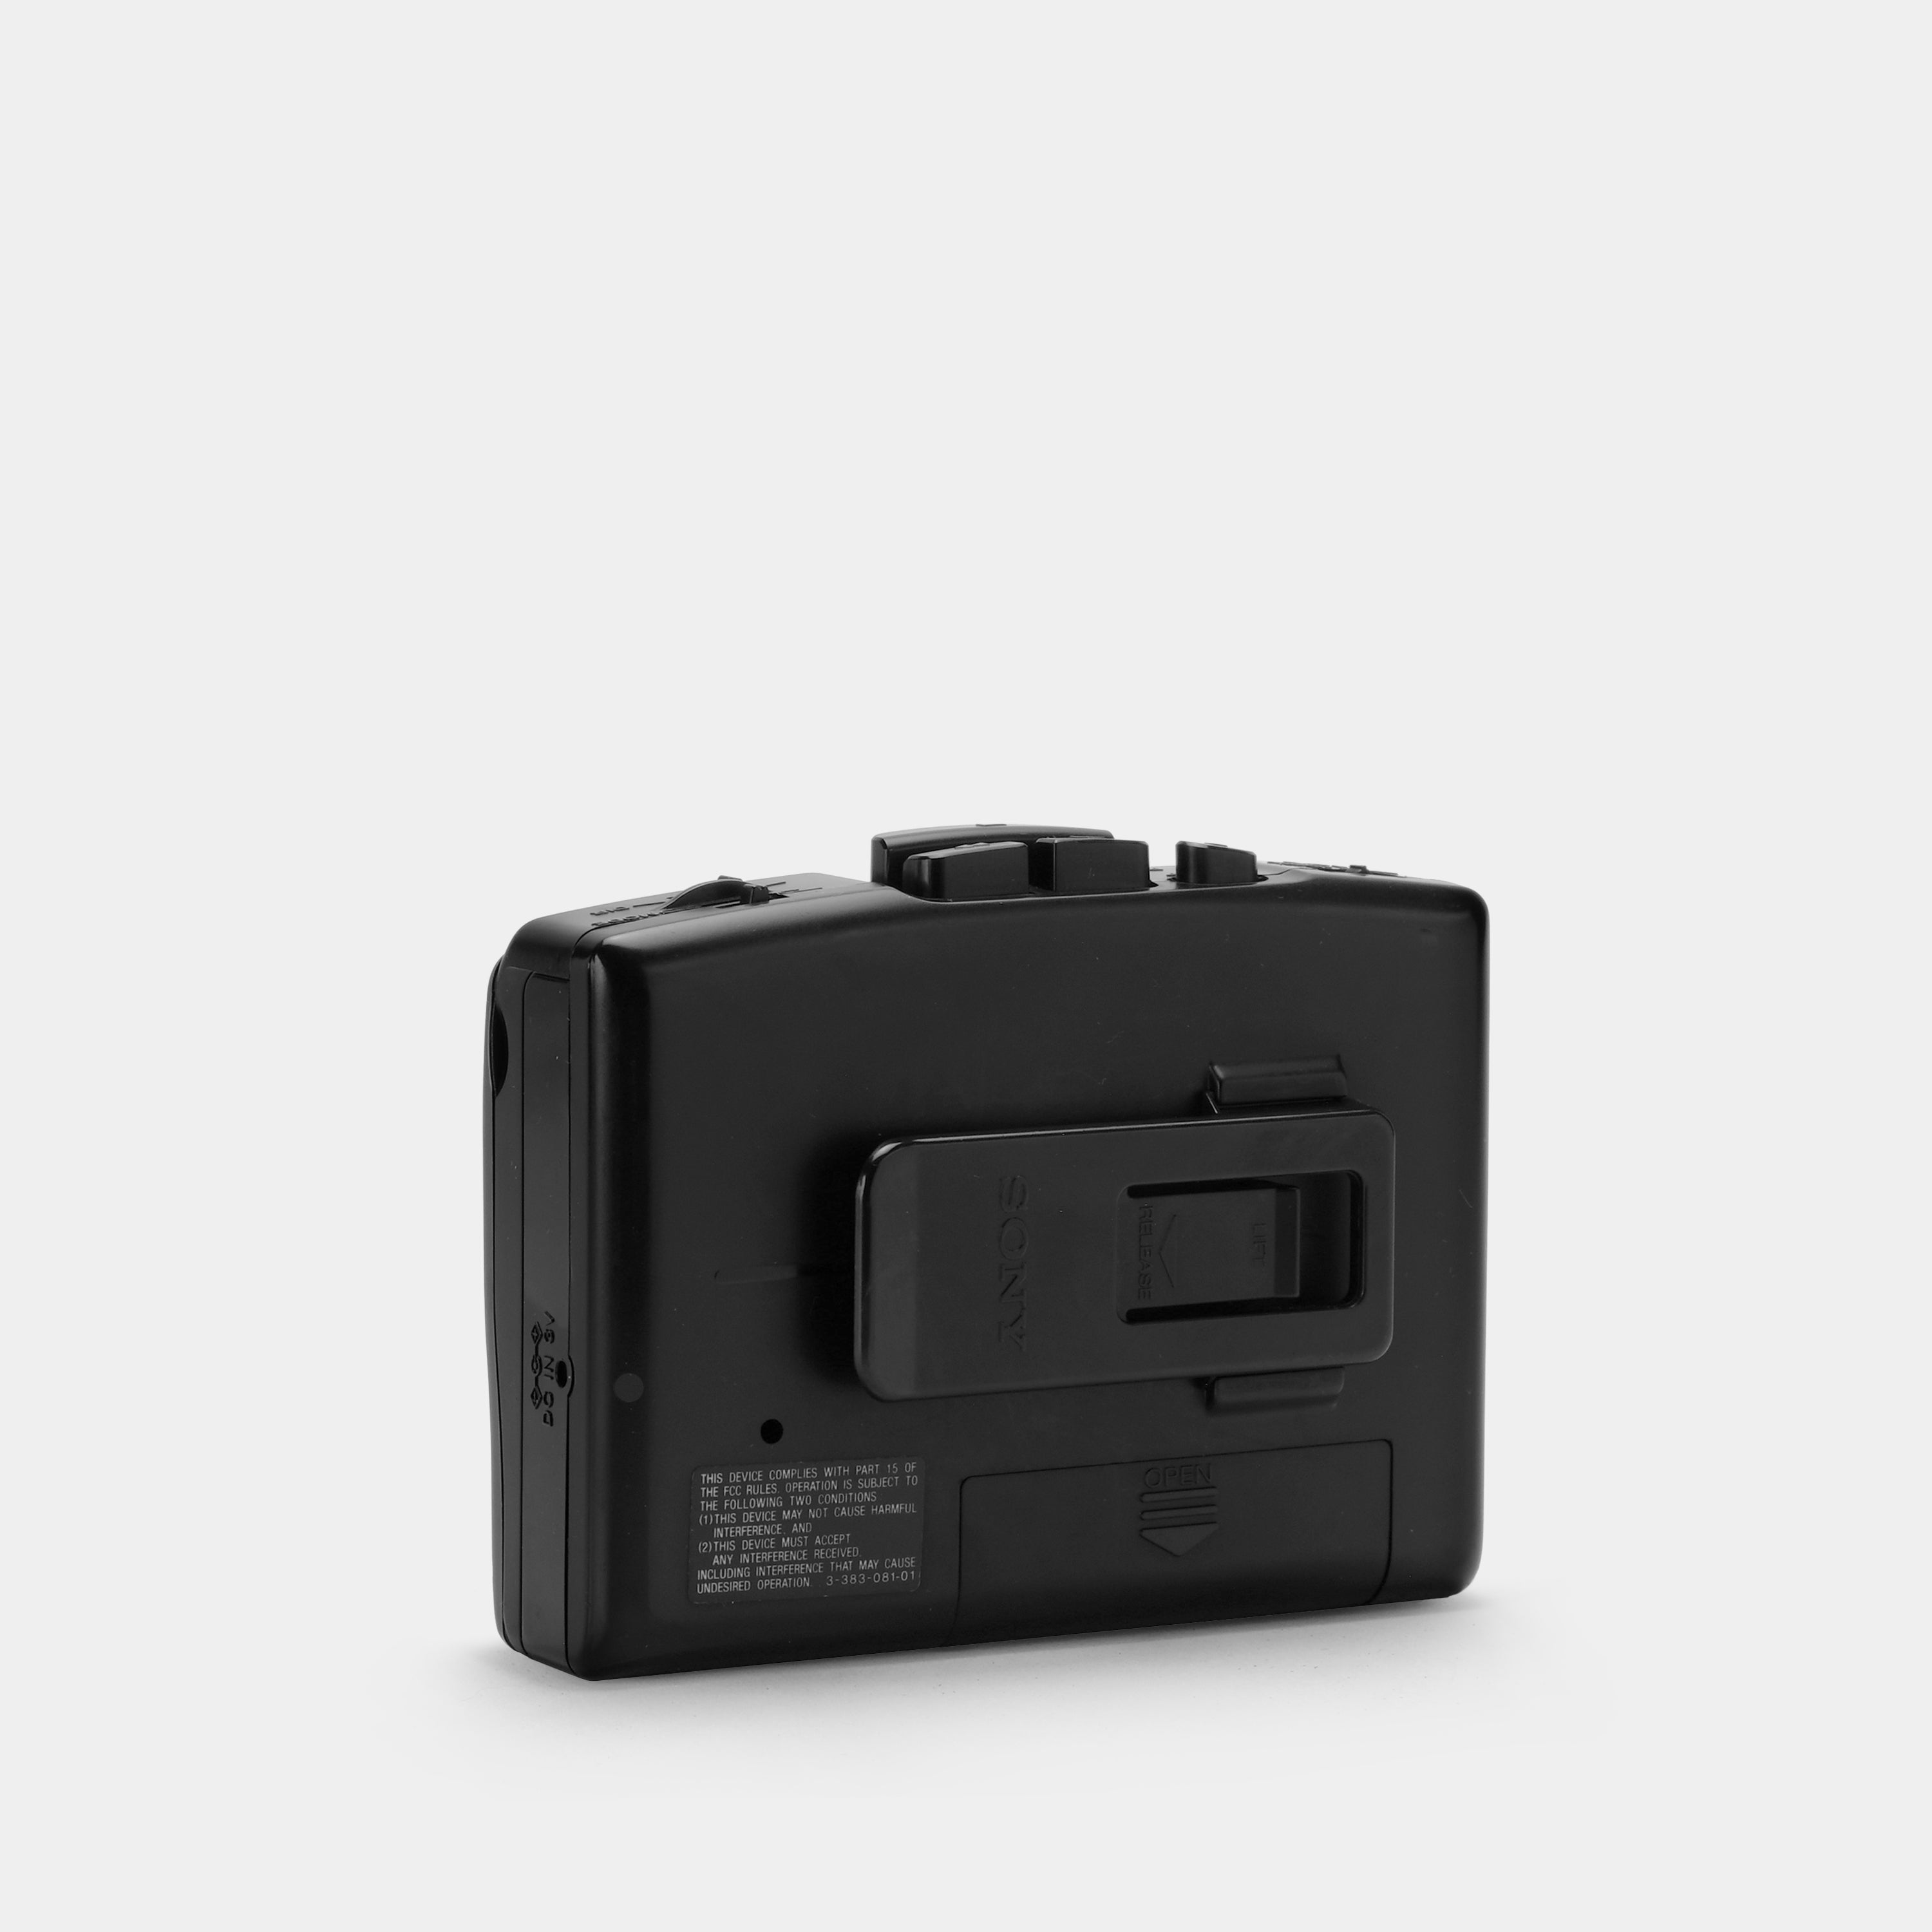 Sony Walkman WM-FX405 Portable Cassette Player